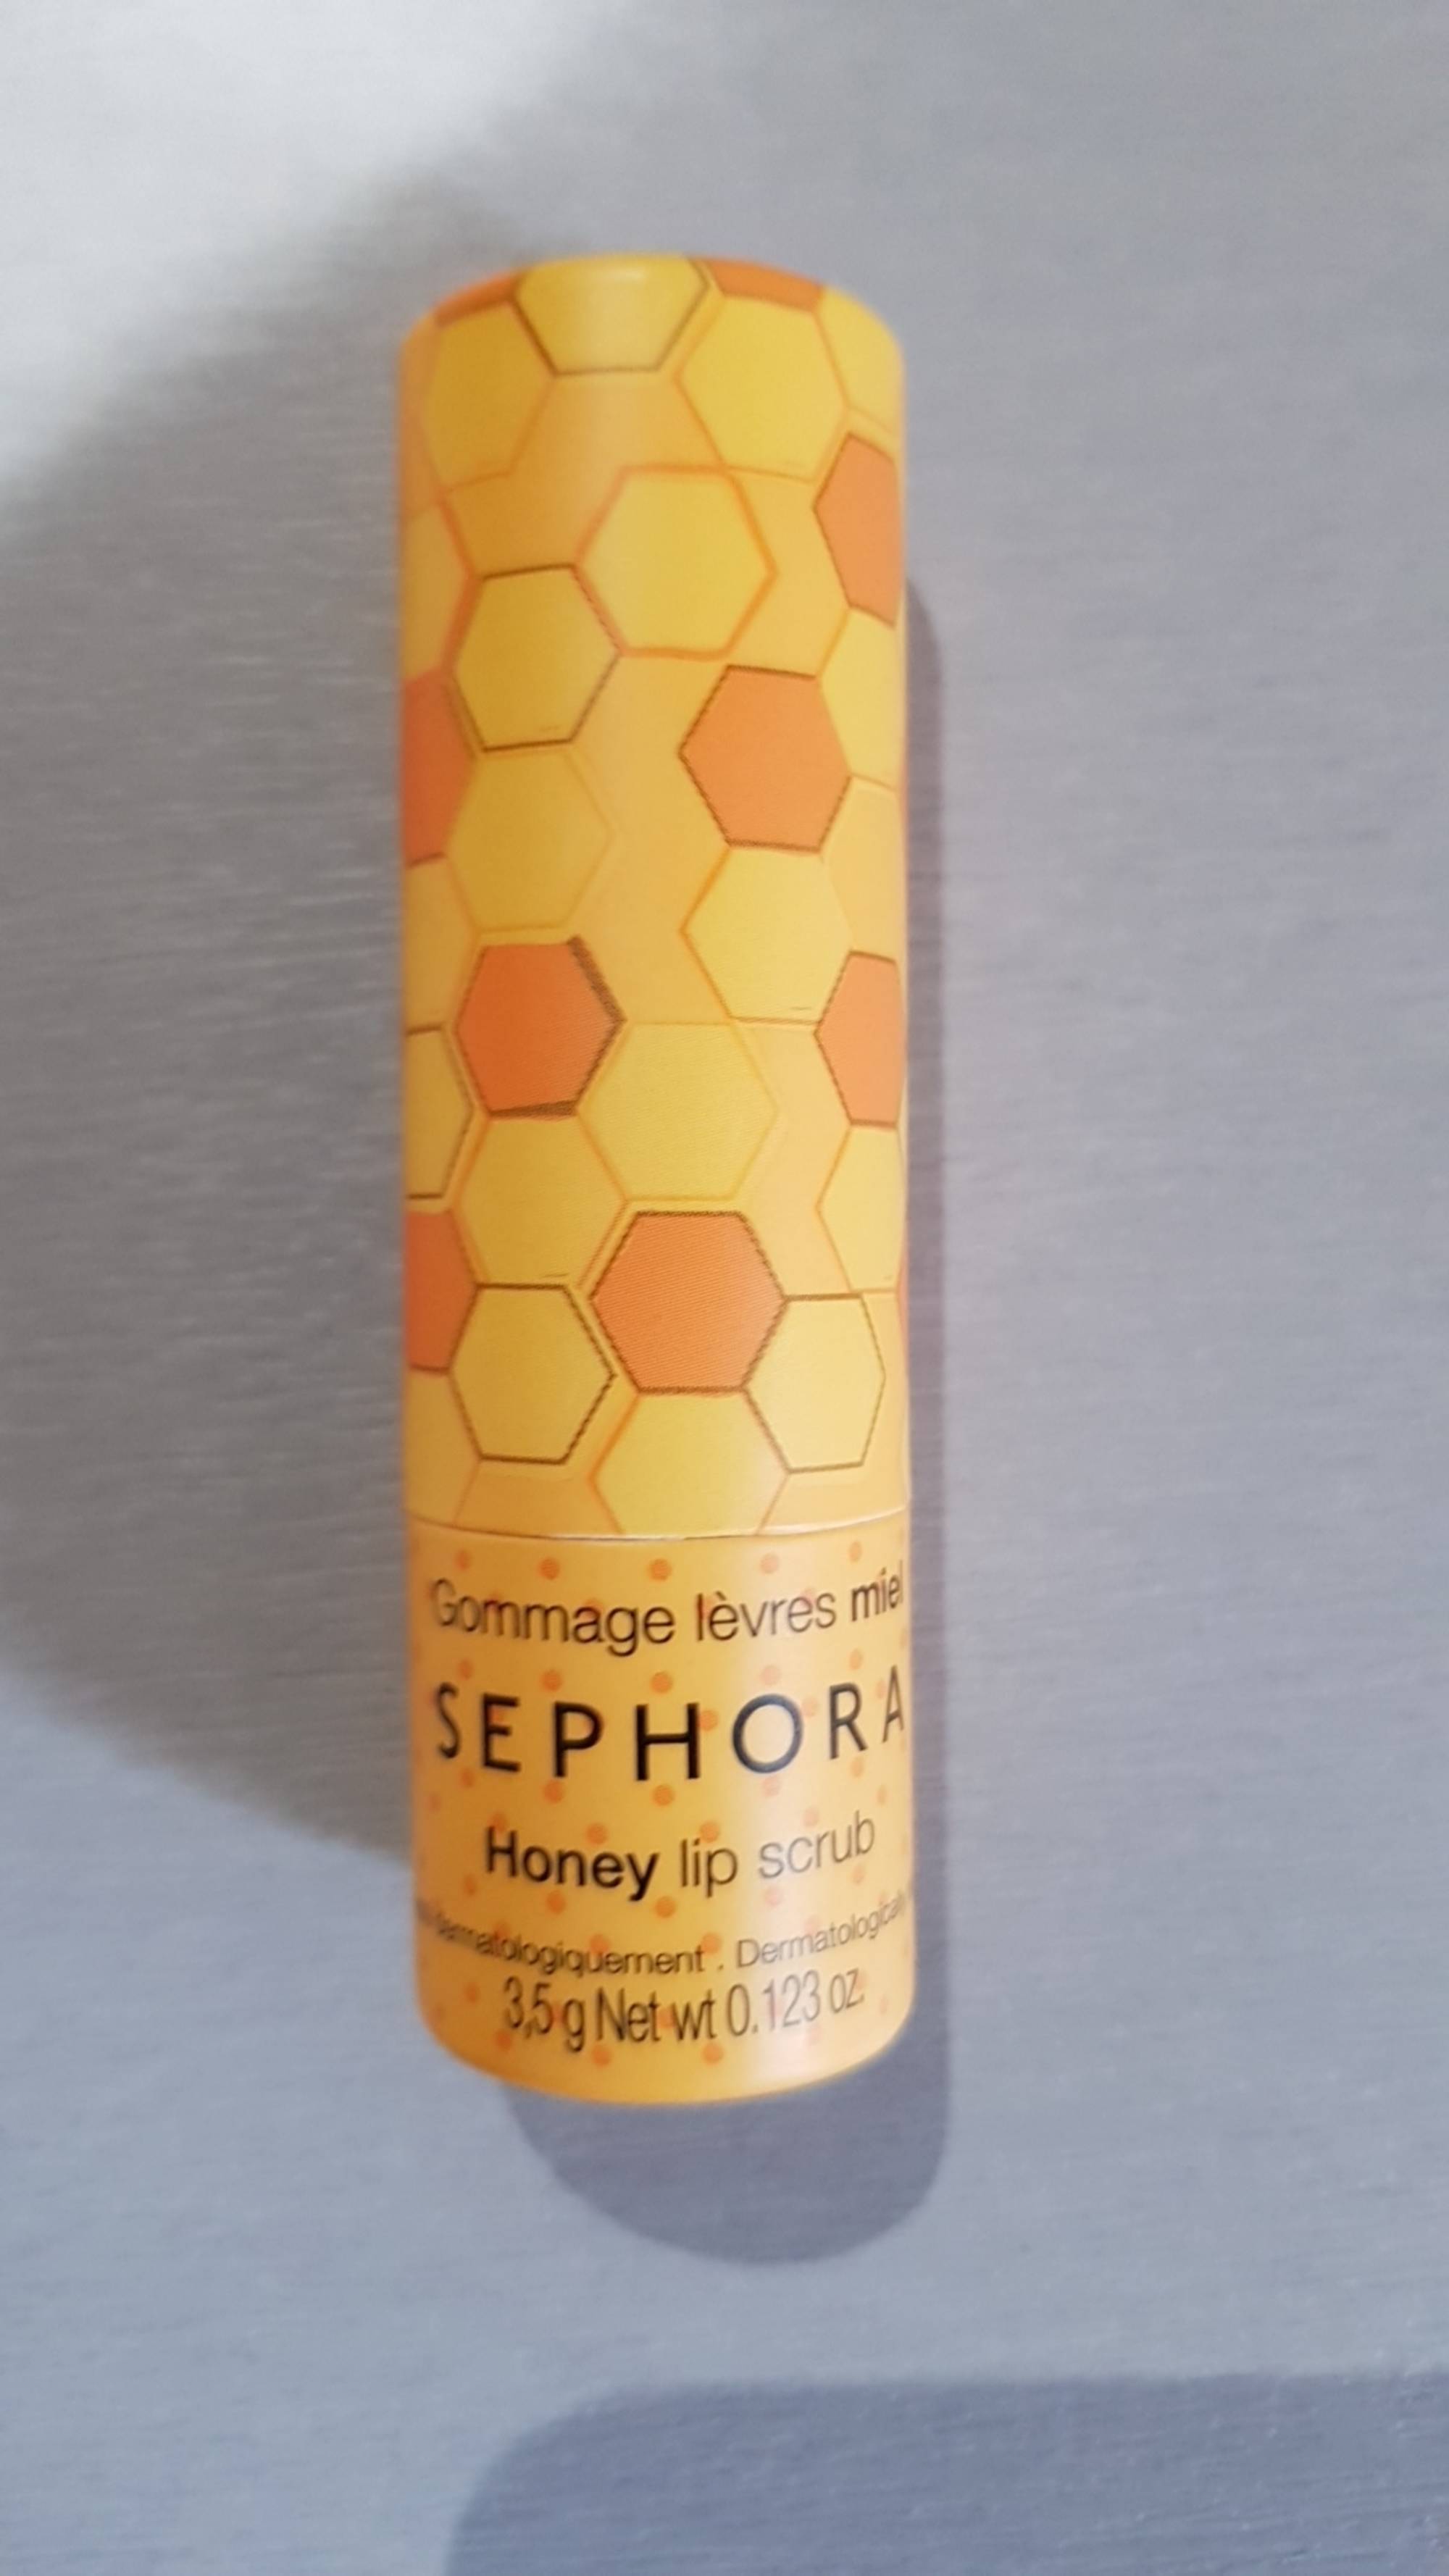 SEPHORA - Gommage lèvres miel